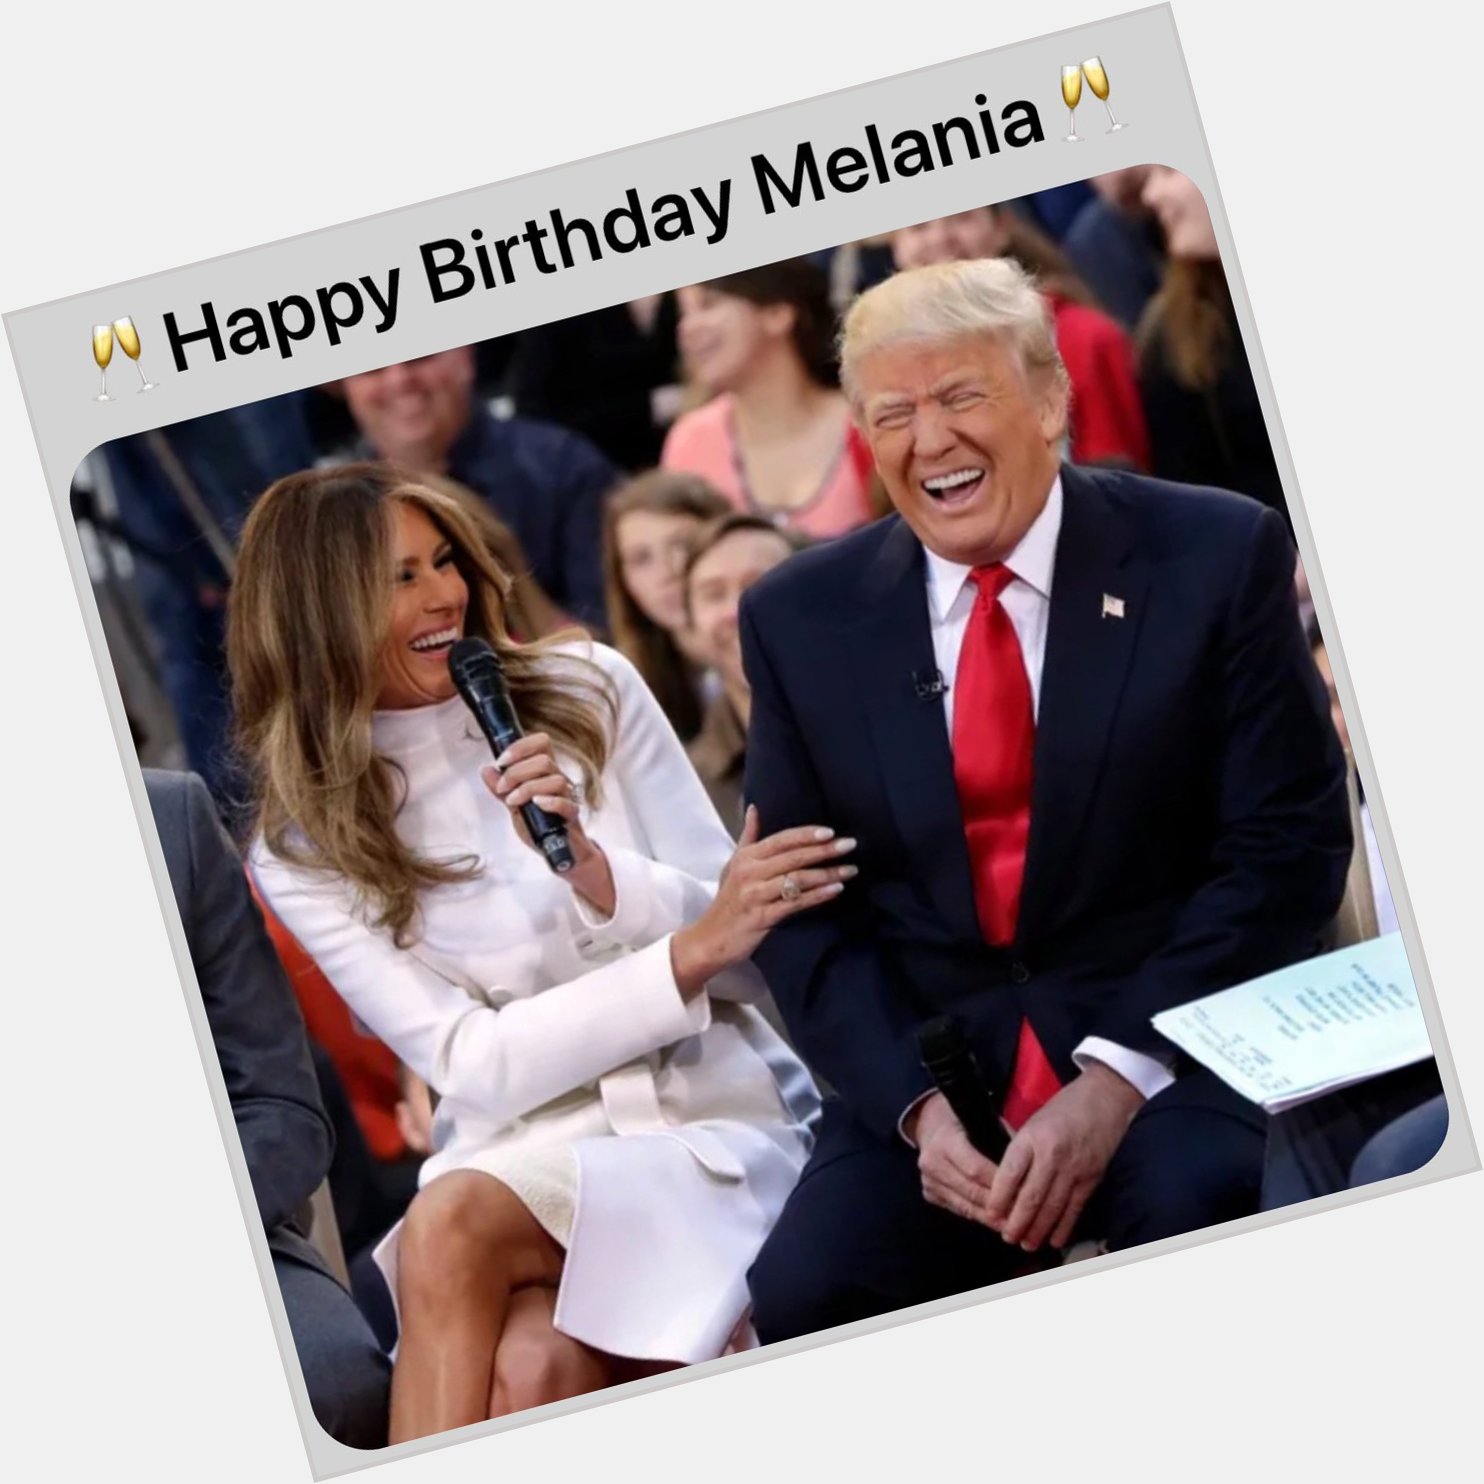    Happy Birthday Melania Trump   